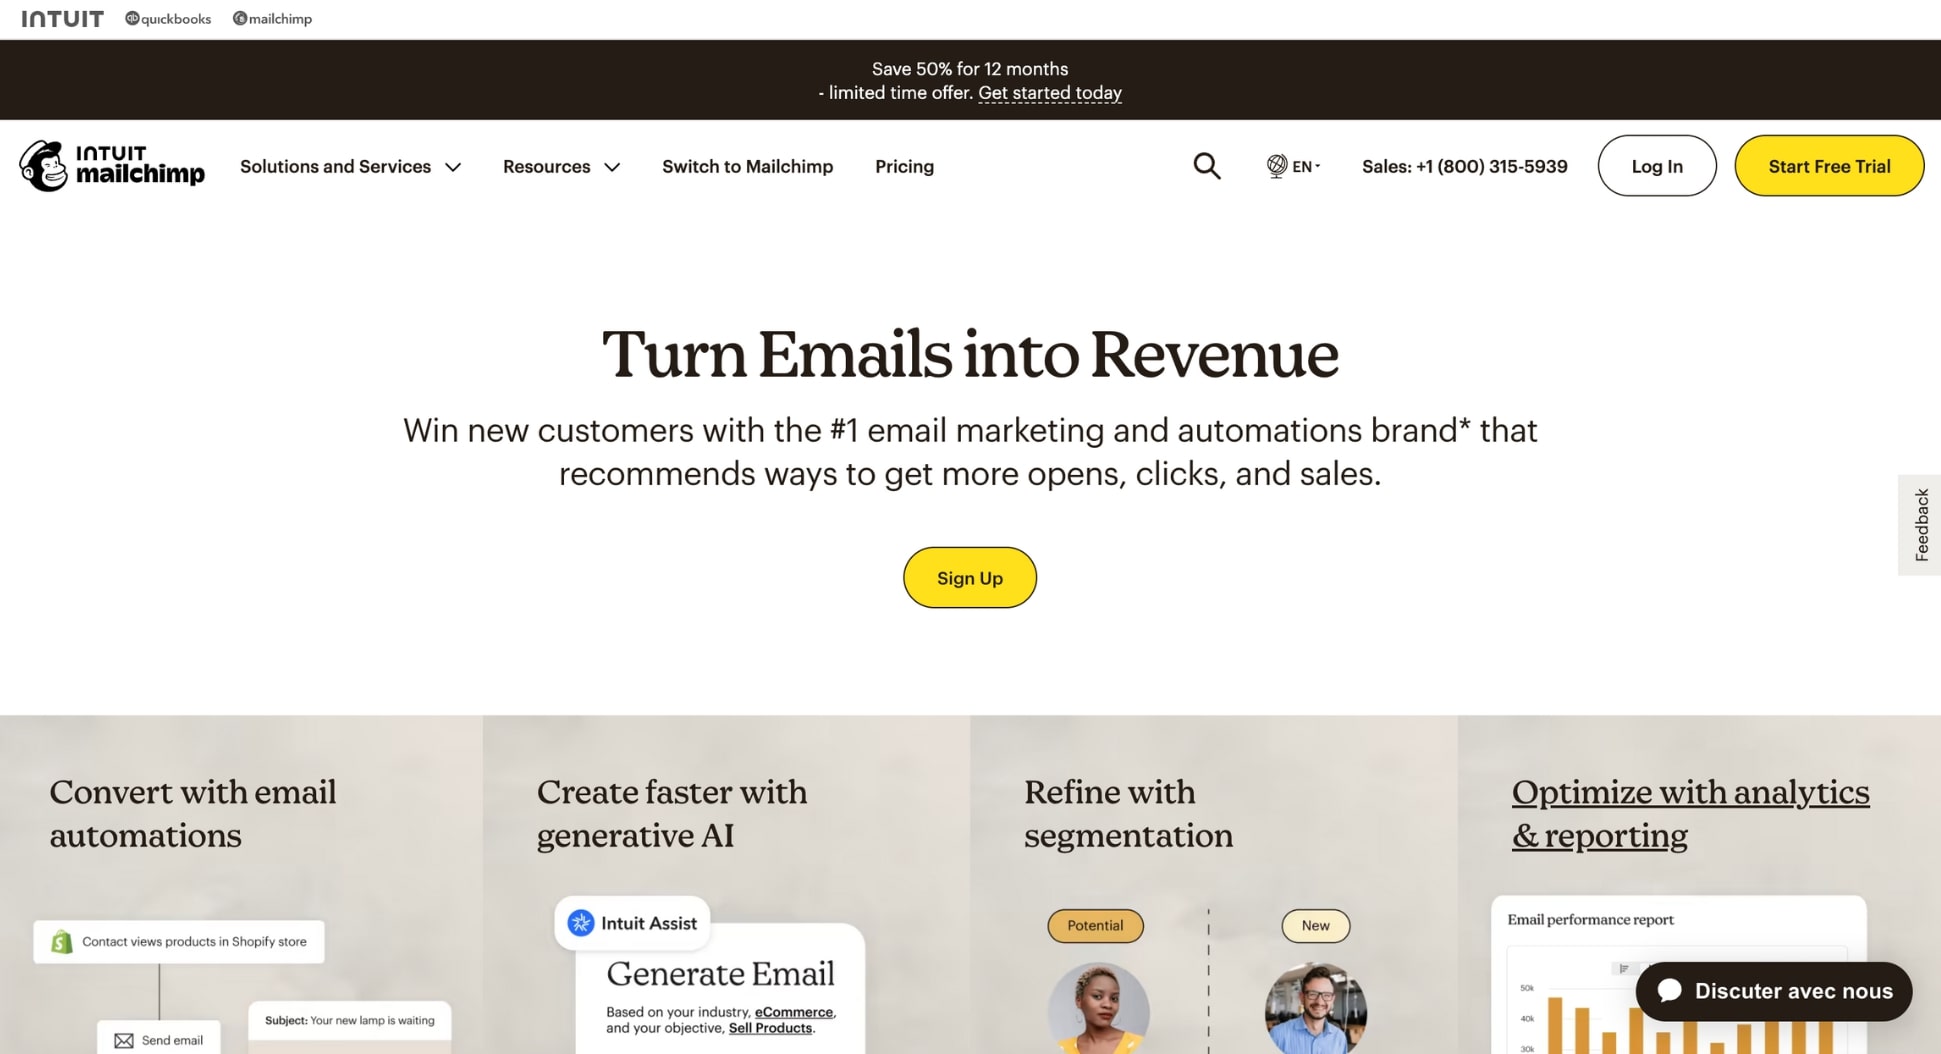 Mailchimp is a popular platform to send mass emails